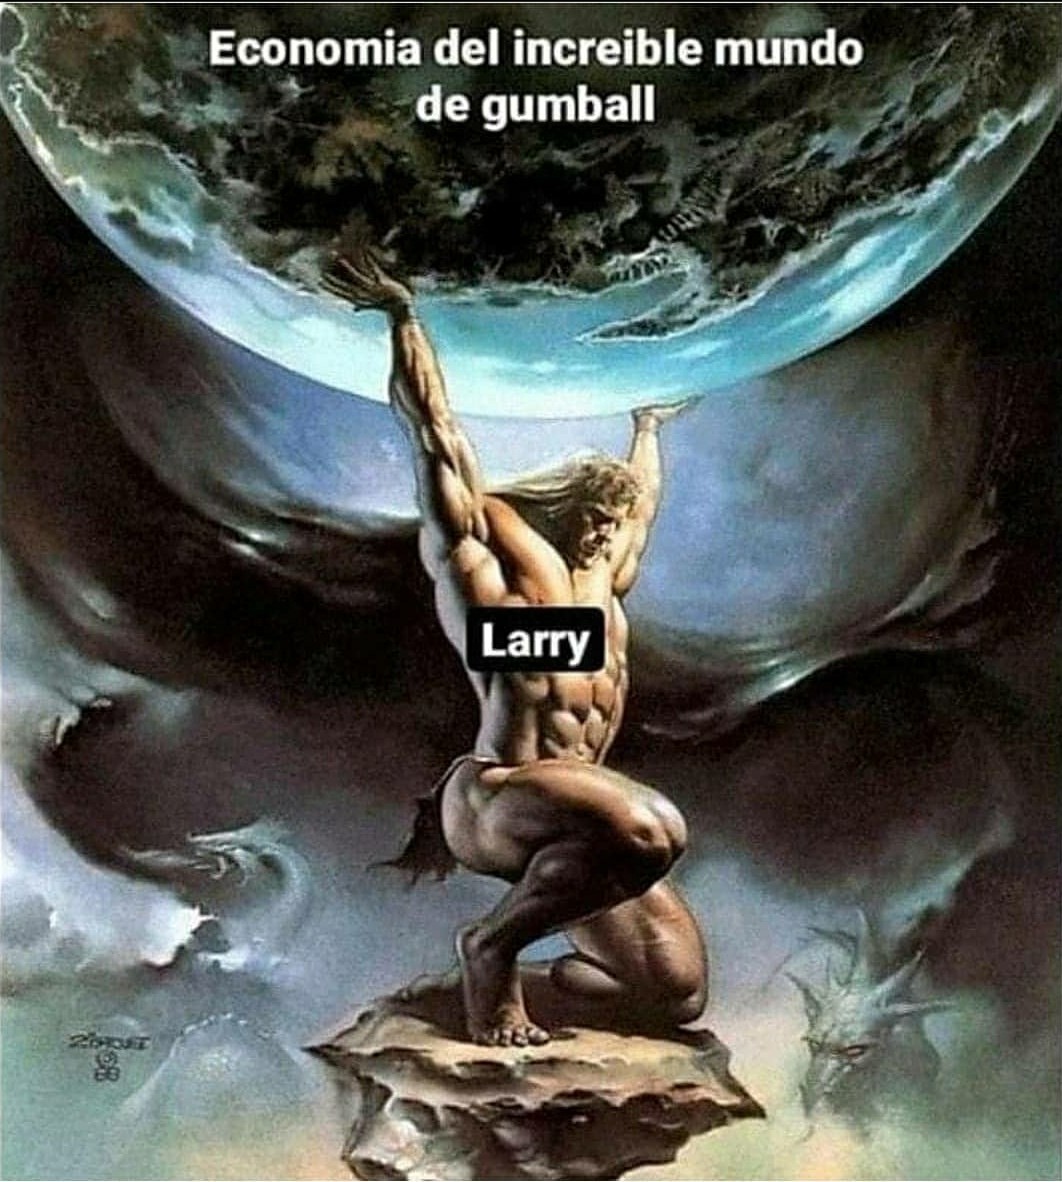 El Dios Larry - meme